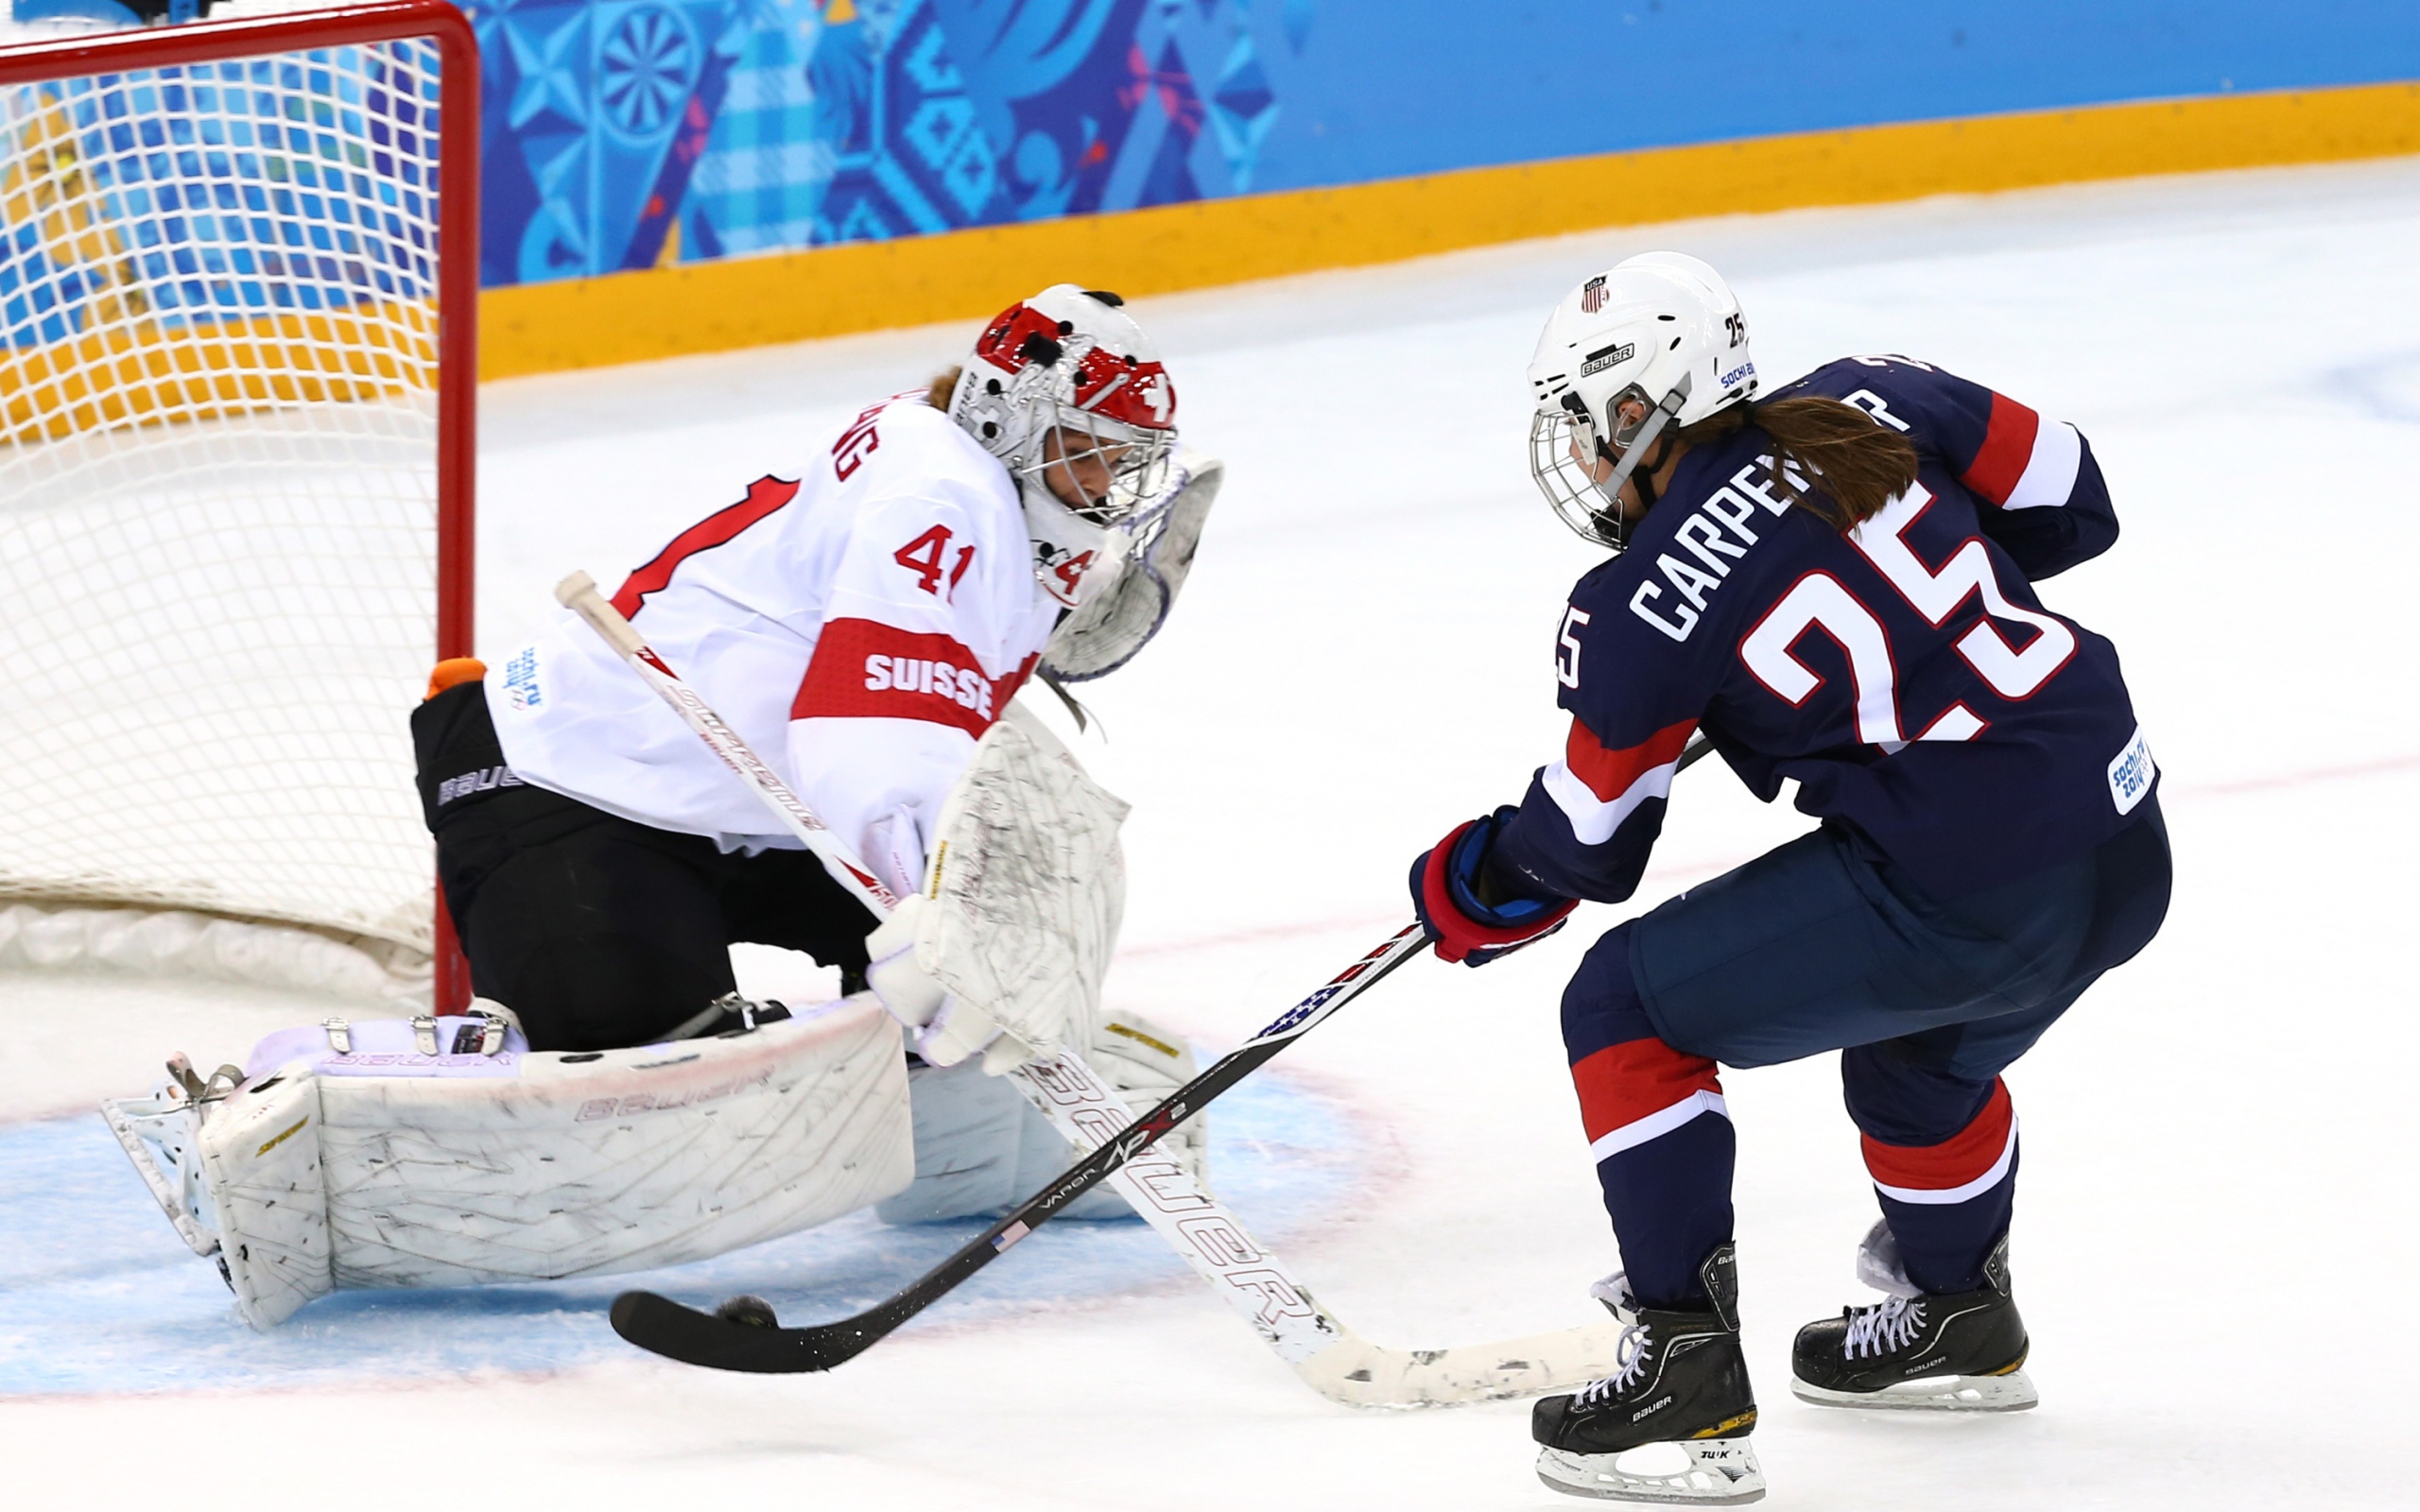 Борьба у ворот в хоккее на Олимпиаде в Сочи